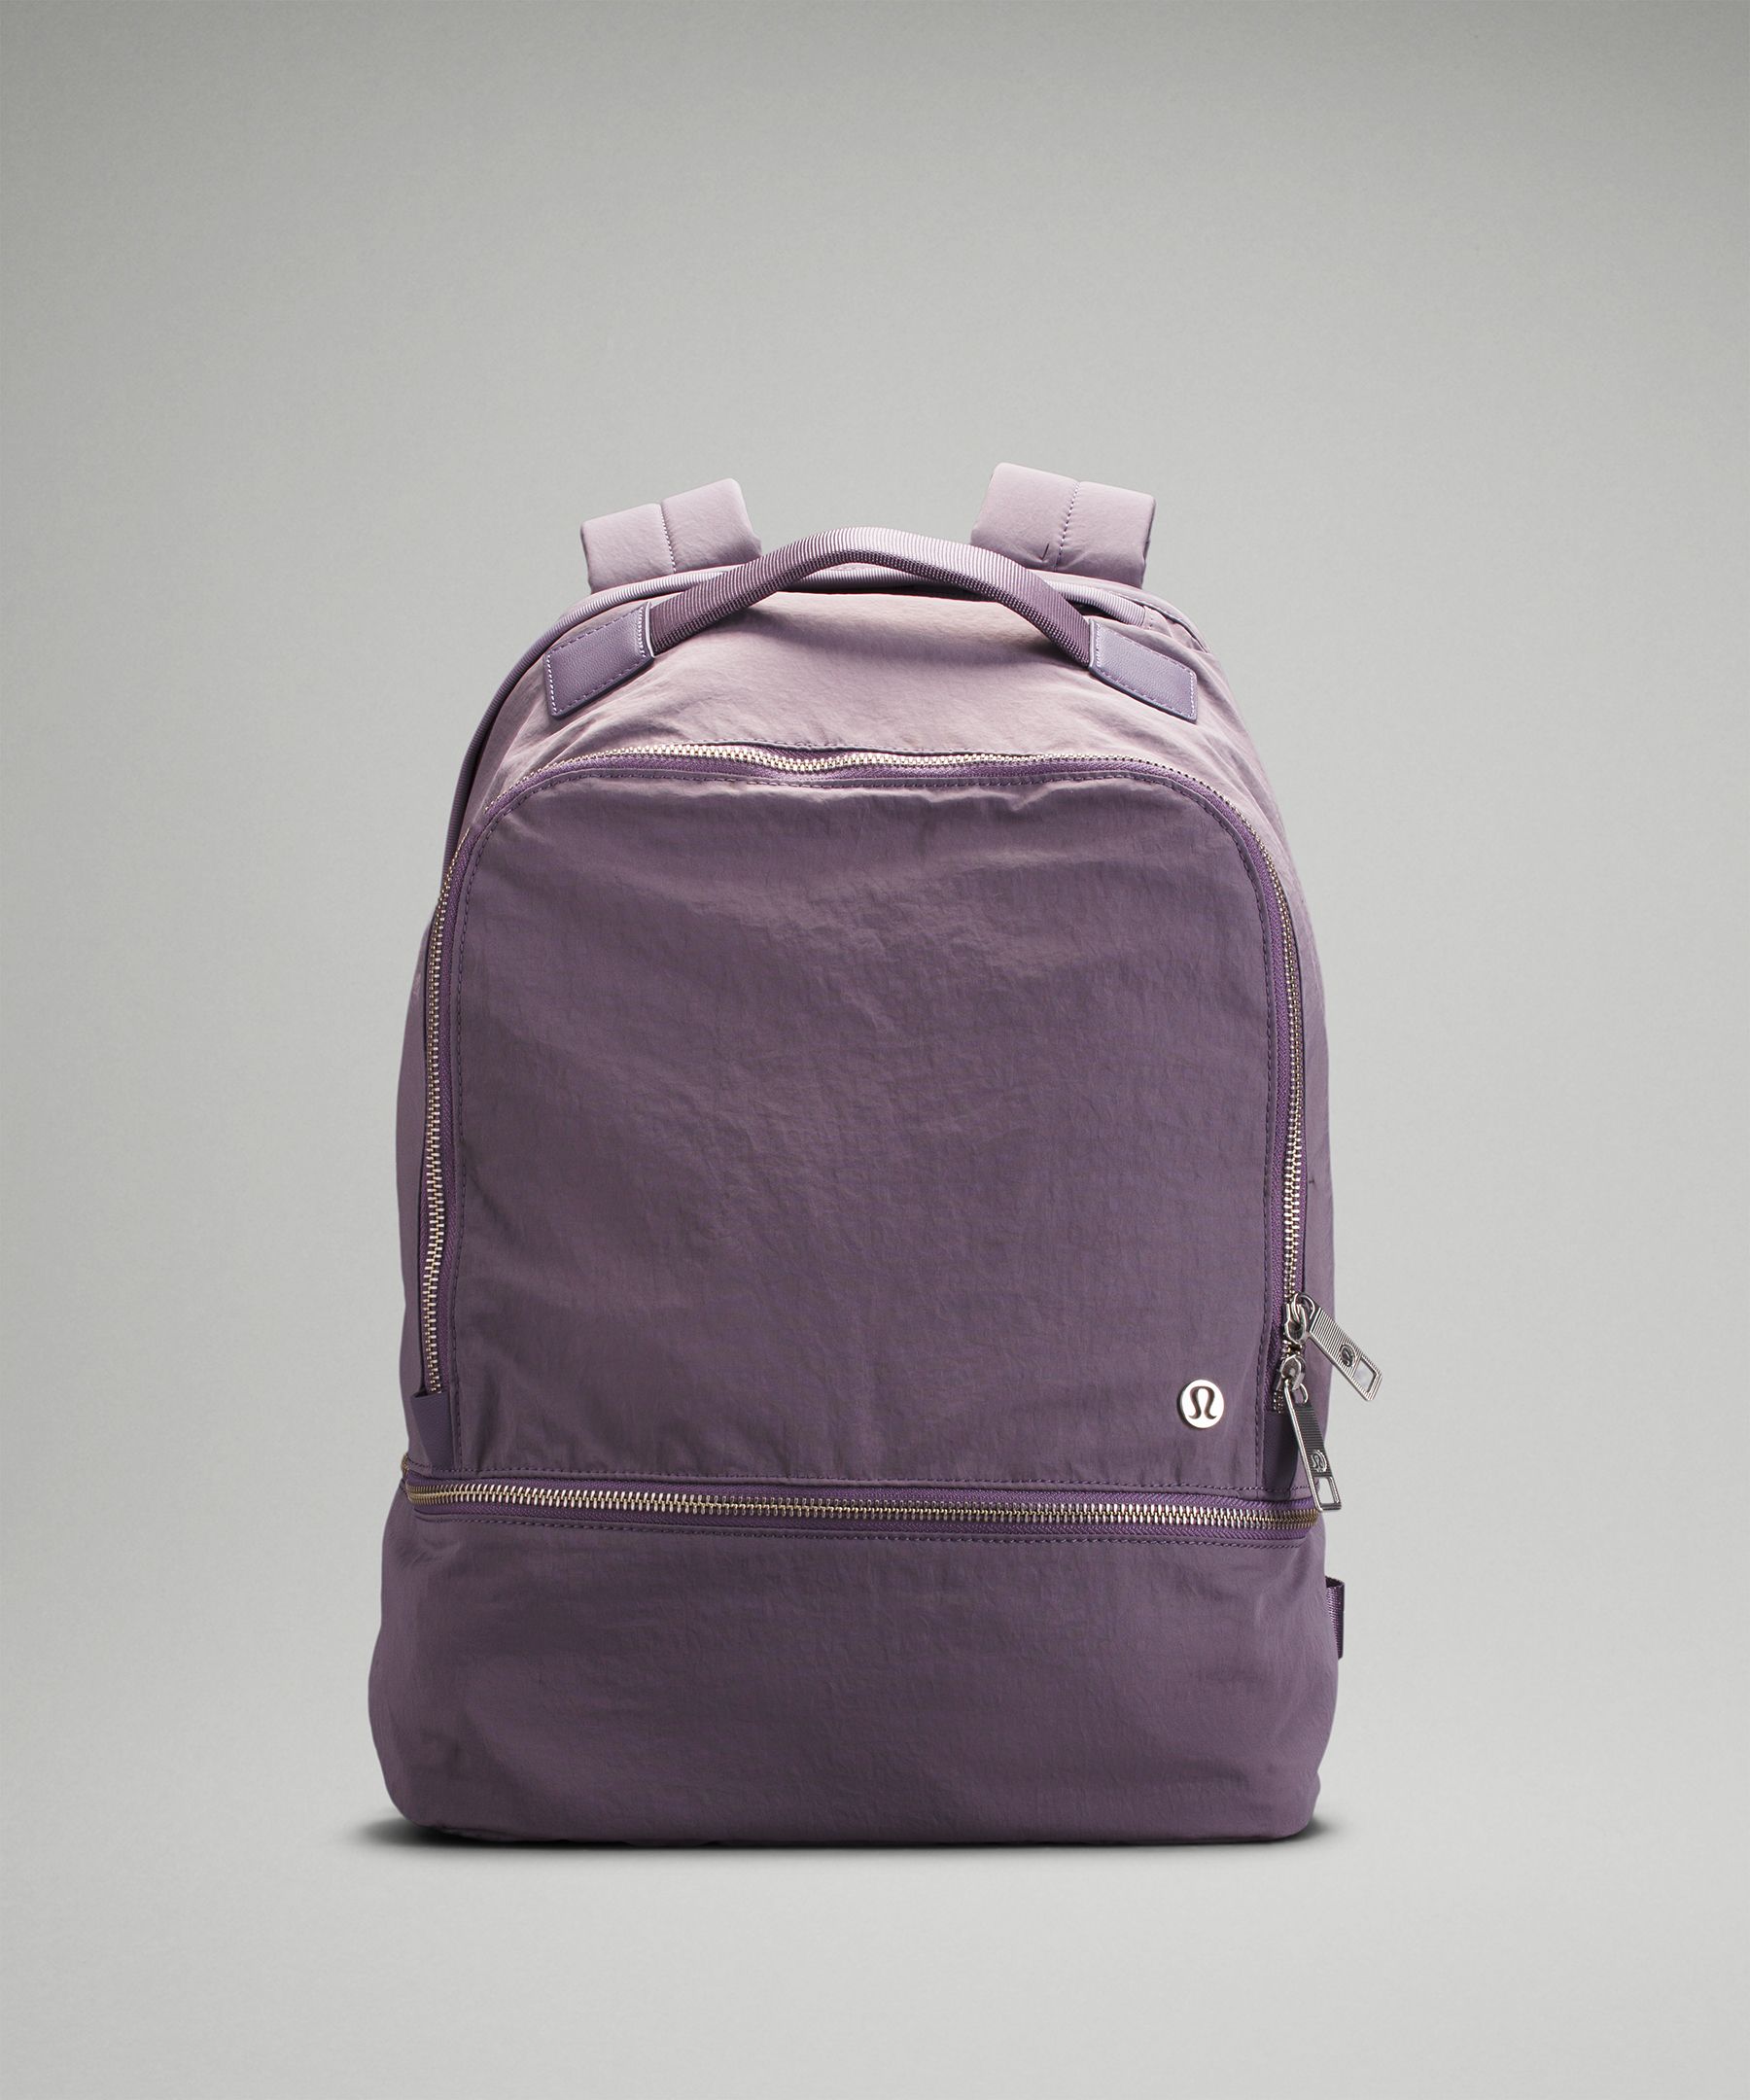 lululemon new parent backpack usa